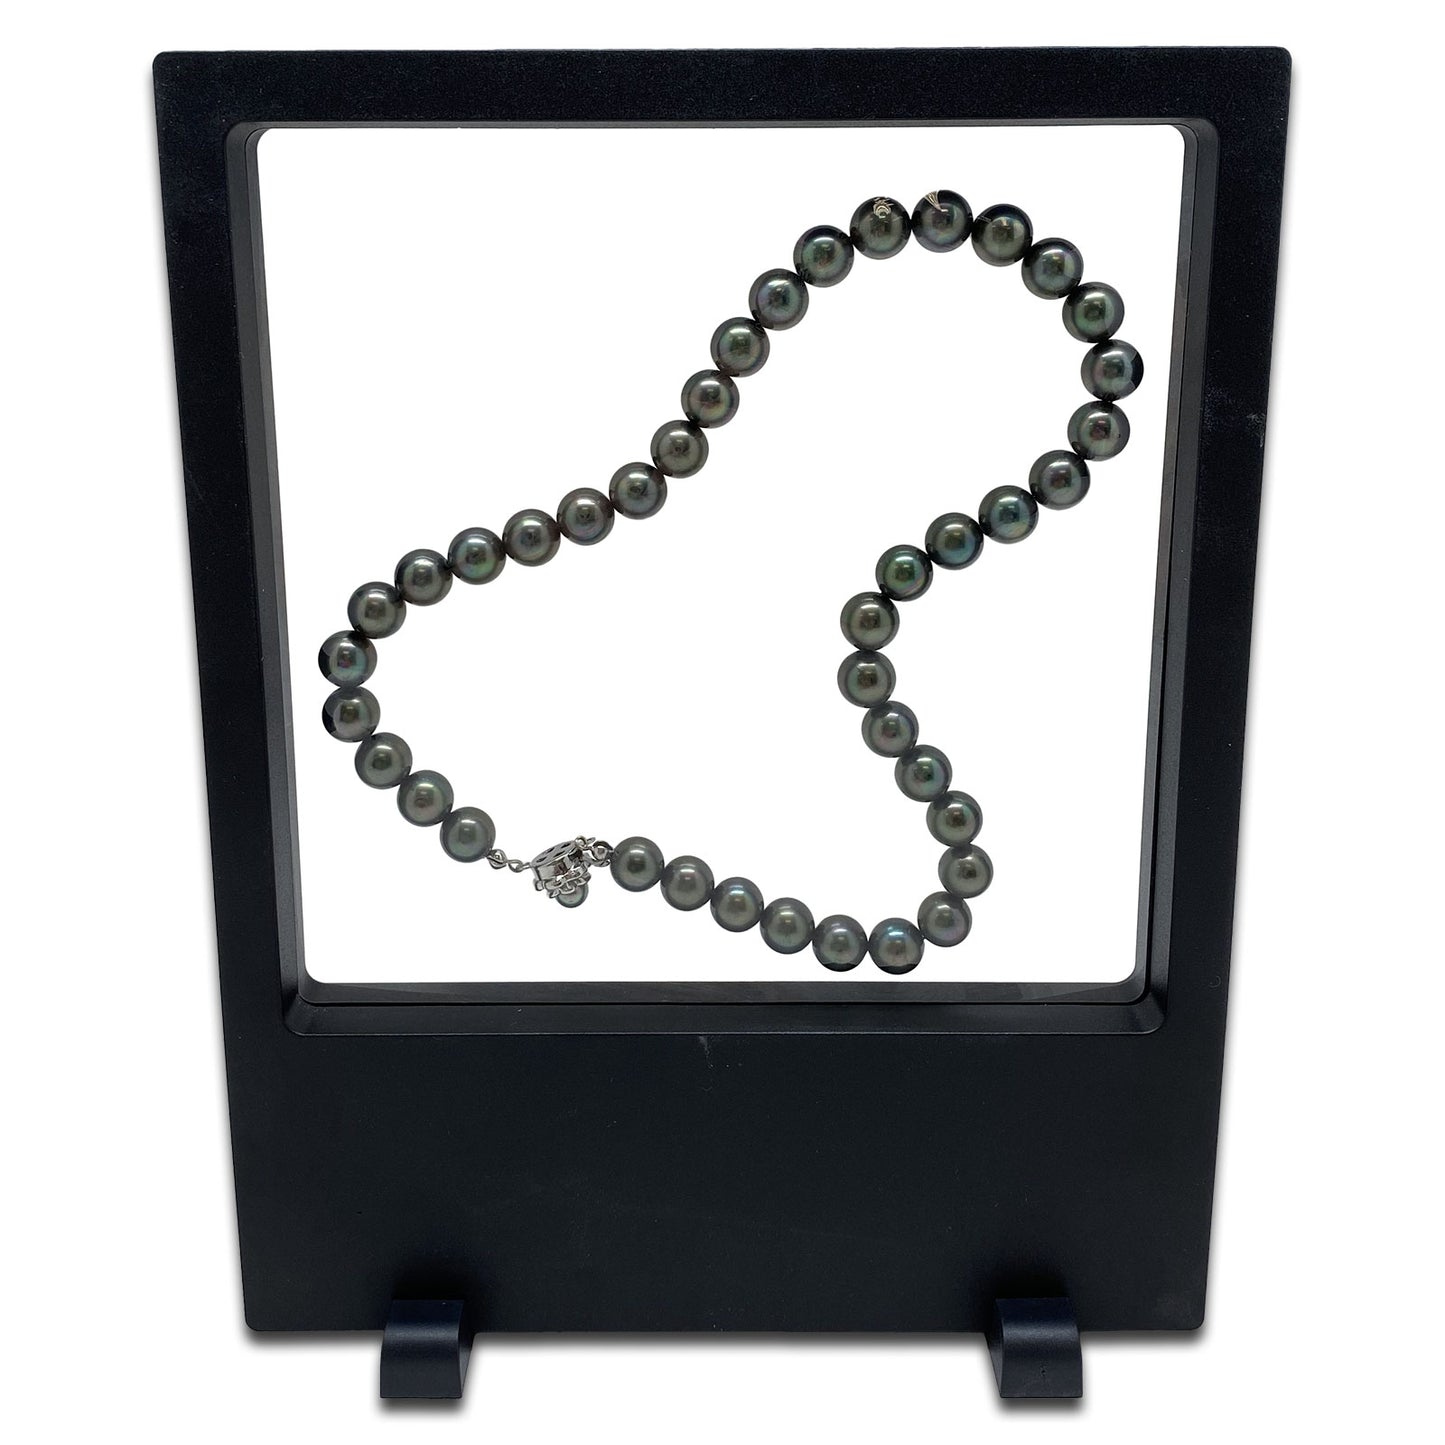 7" x 9" Black Floating Frame Jewelry Display Case